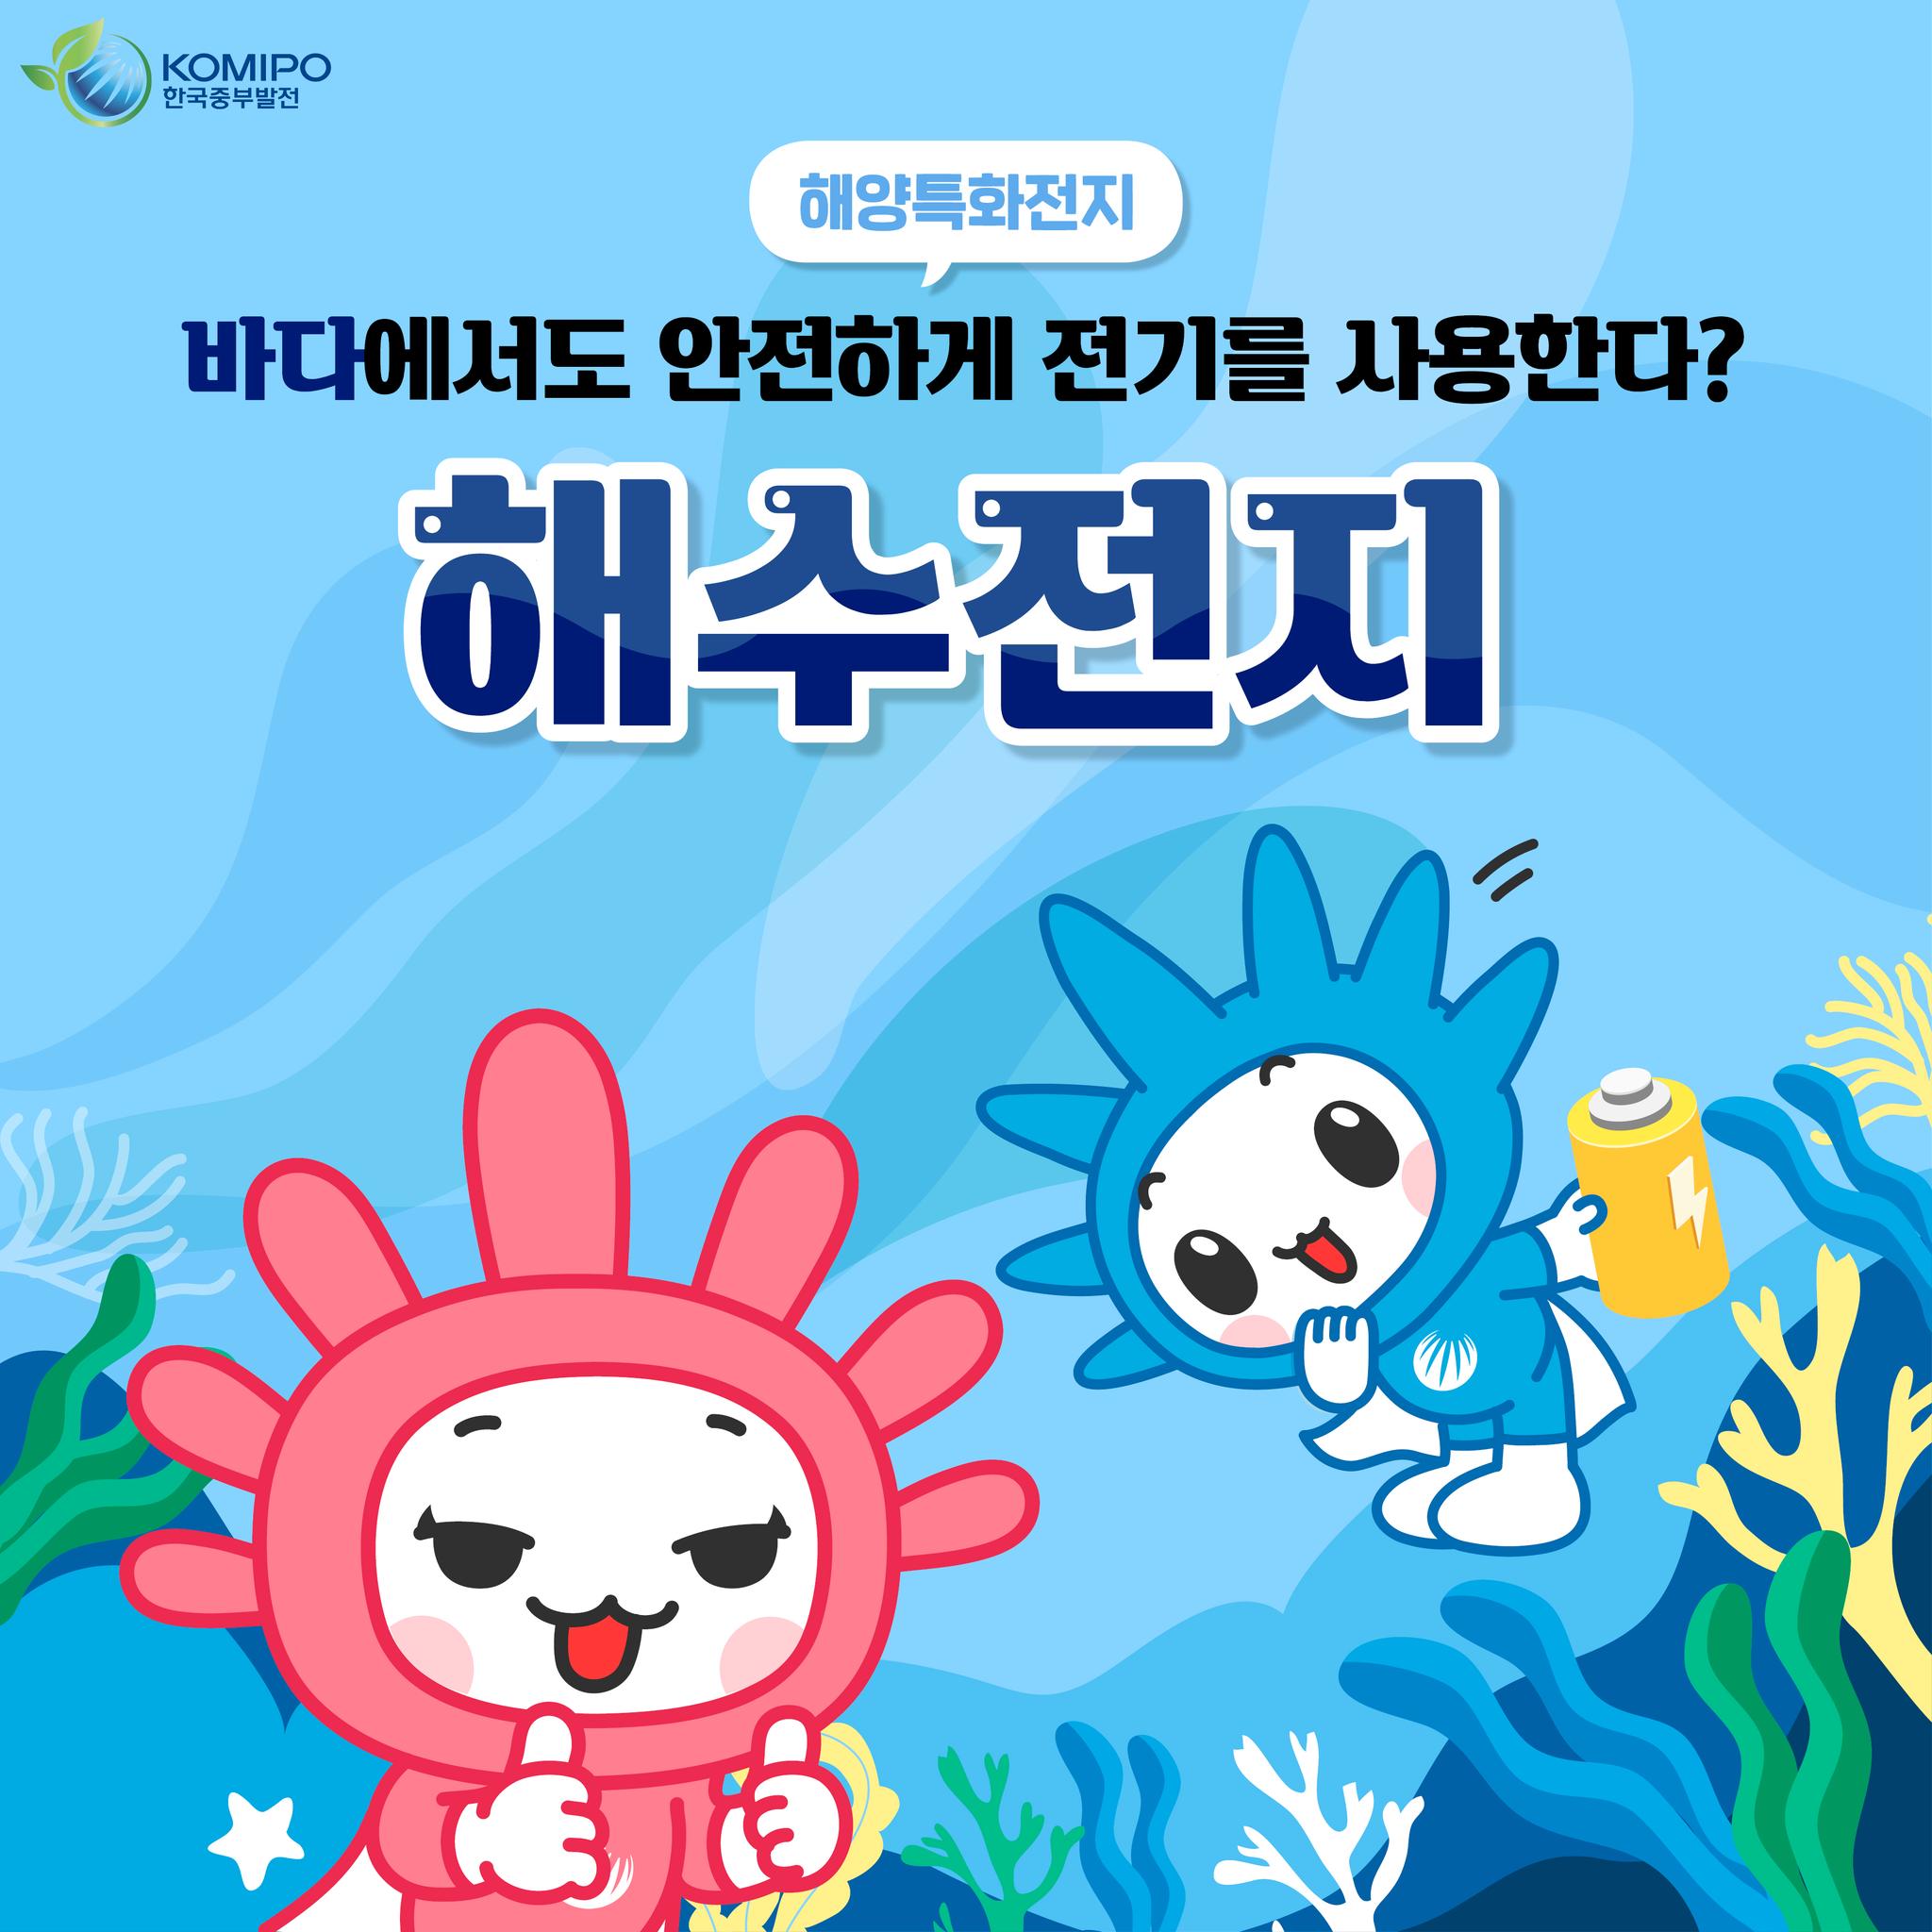 KOMIPO 한국중부발전 해양특화전지 바다에서더 안전하게 전기를 사용한다? 해수전지